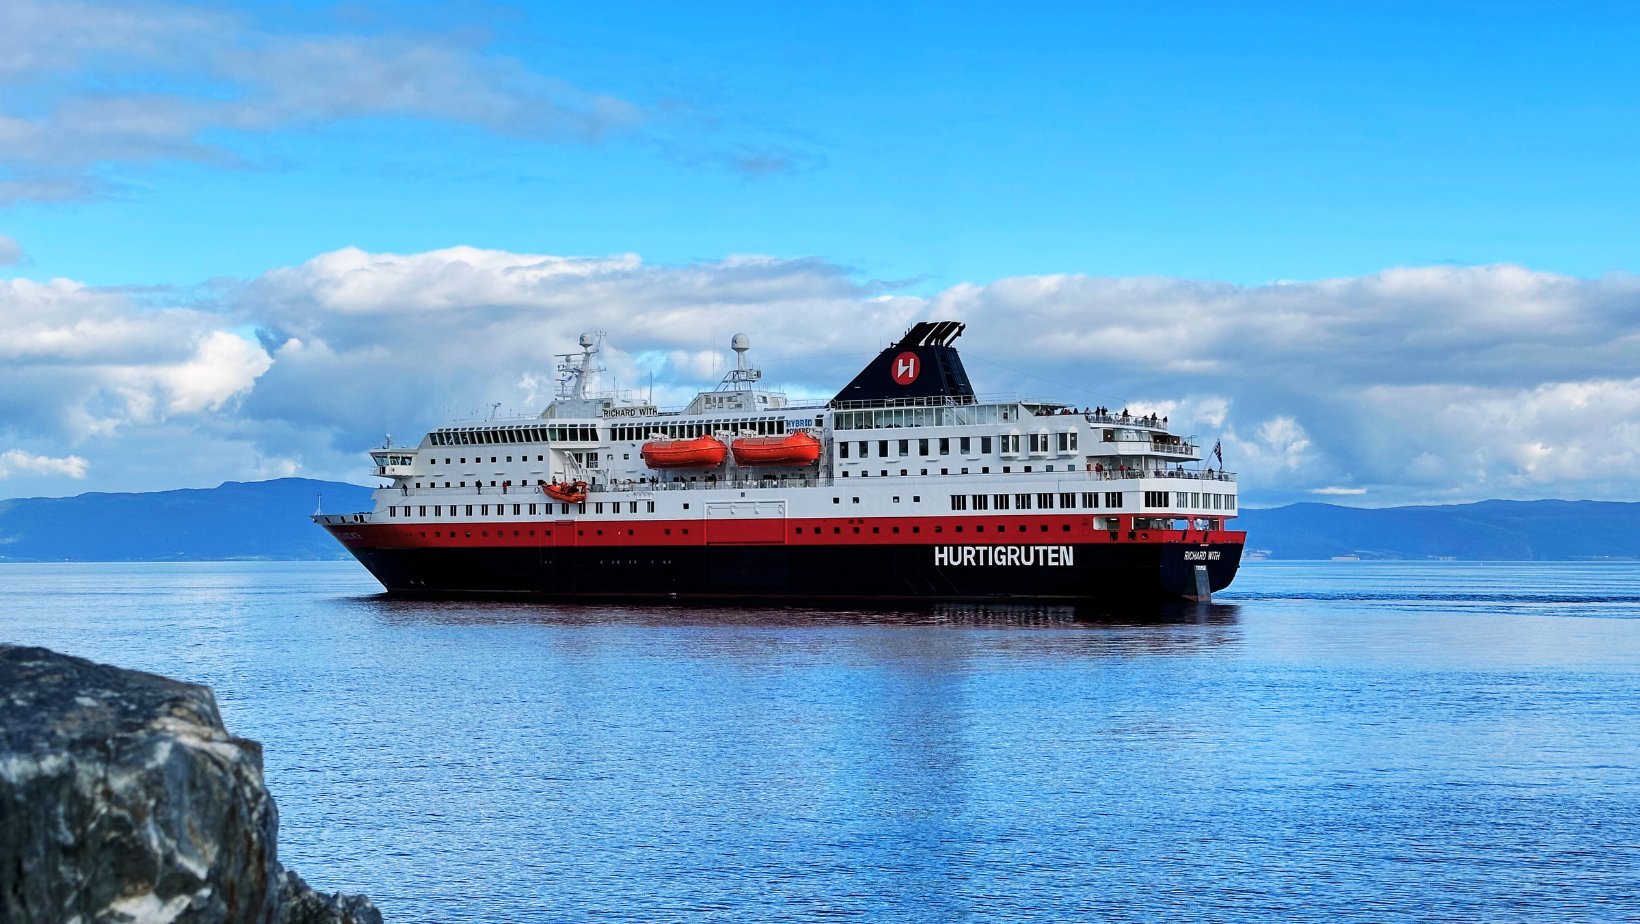 Hurtigruten coastal ferry leaving Trondheim. Photo: David Nikel.